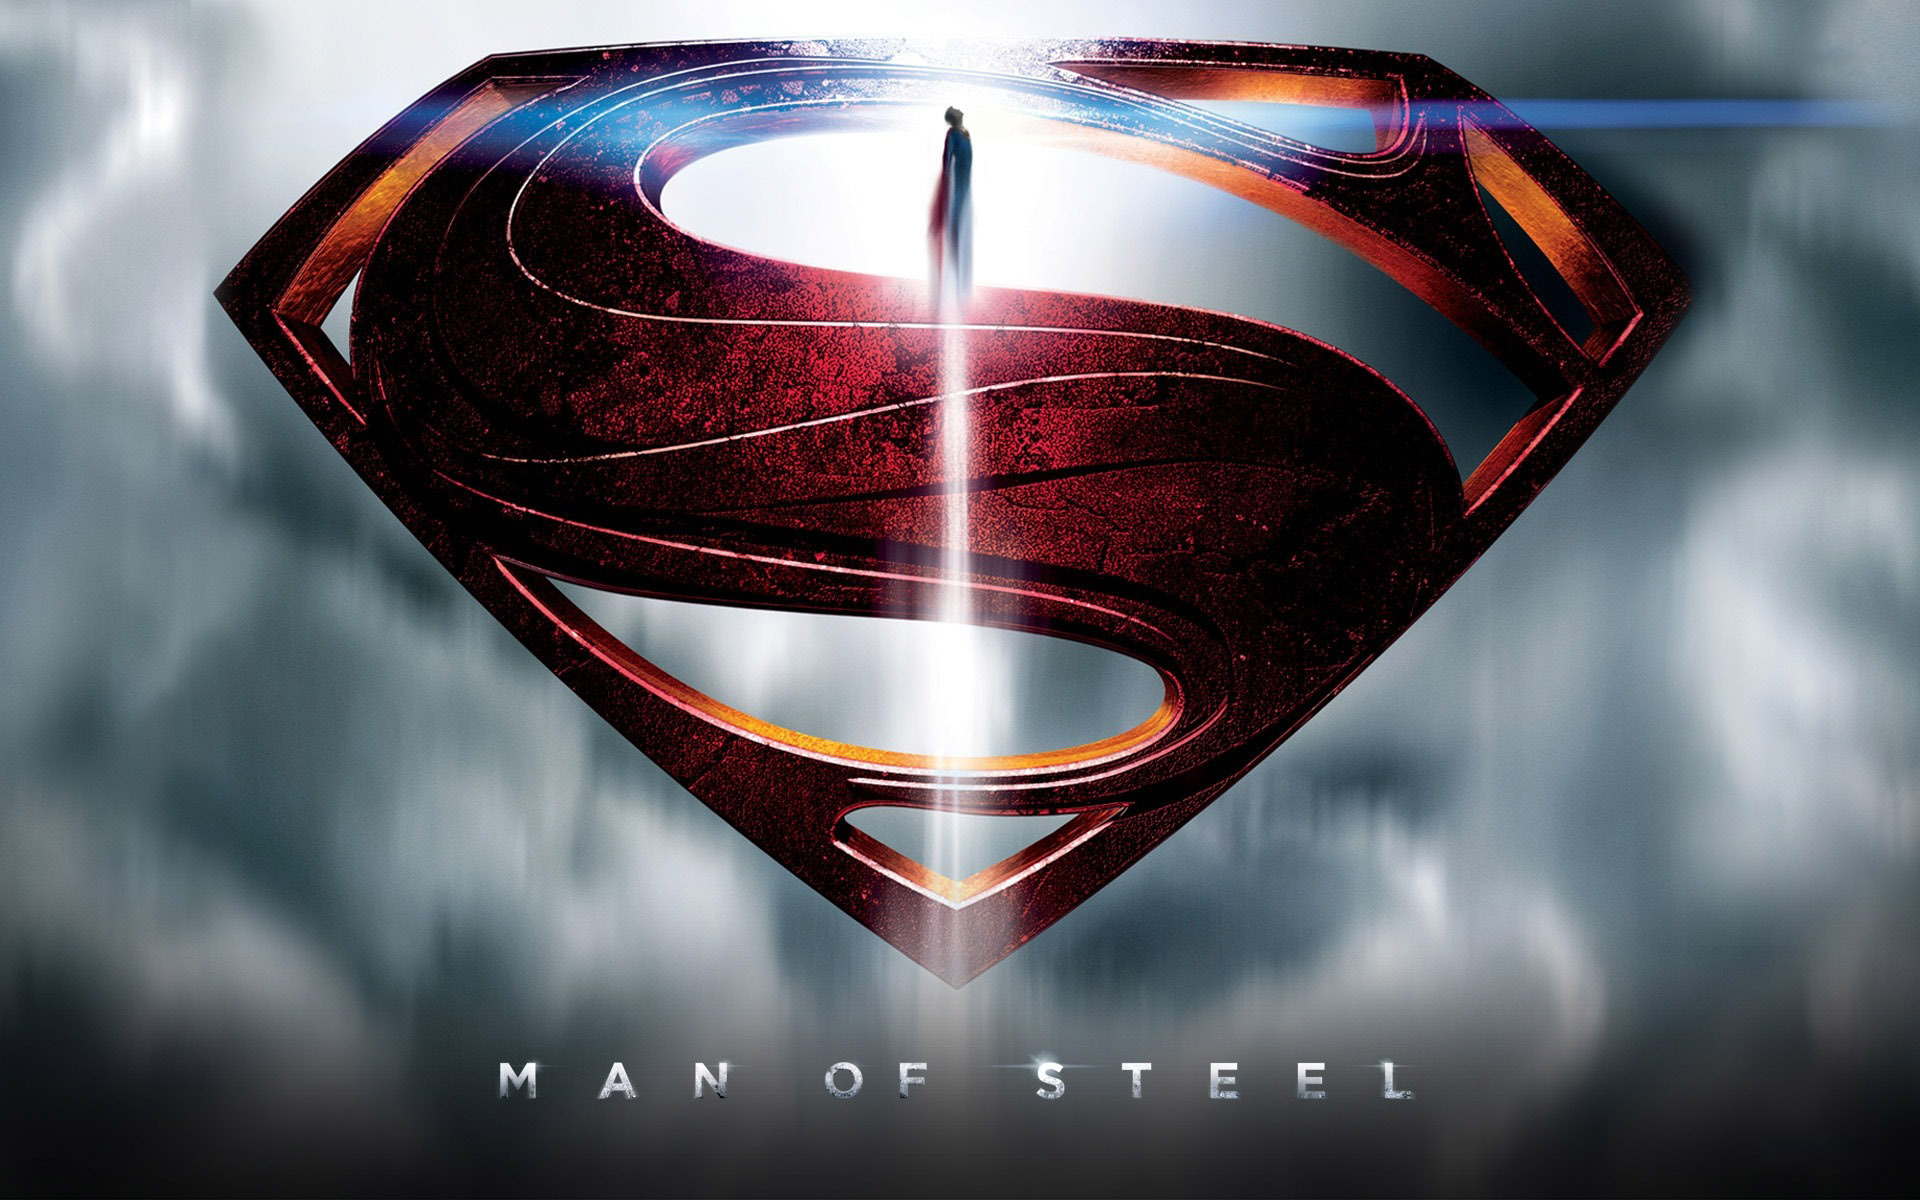 man of steel, superman logo, superman, movie images